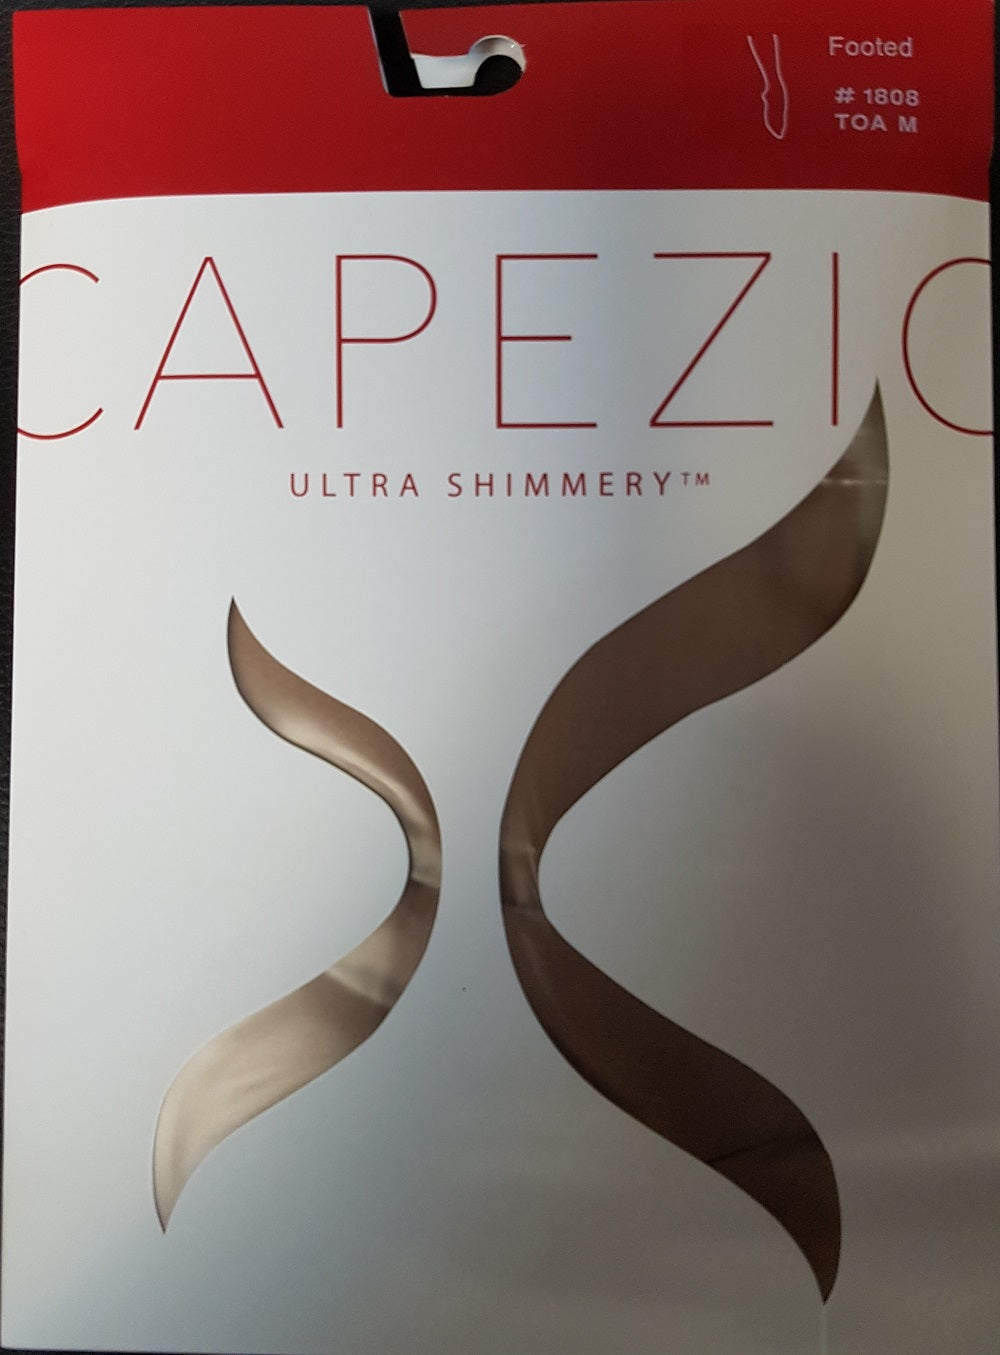 Capezio Caramel Ultra Shimmery Tight - Girls Medium/Small